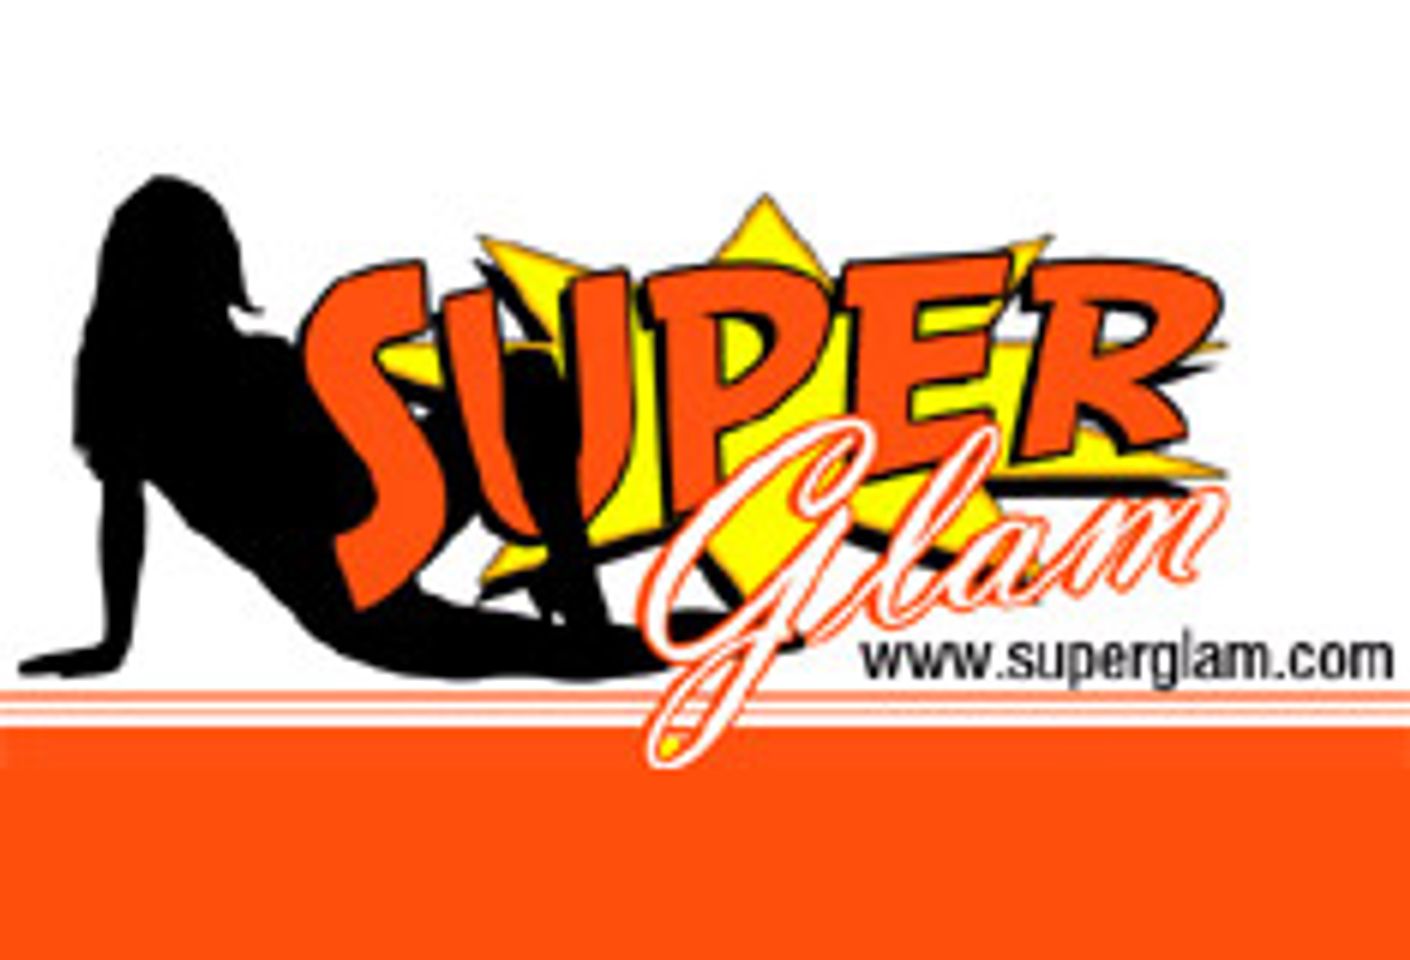 Launched & Offering Specials: Superglam.com